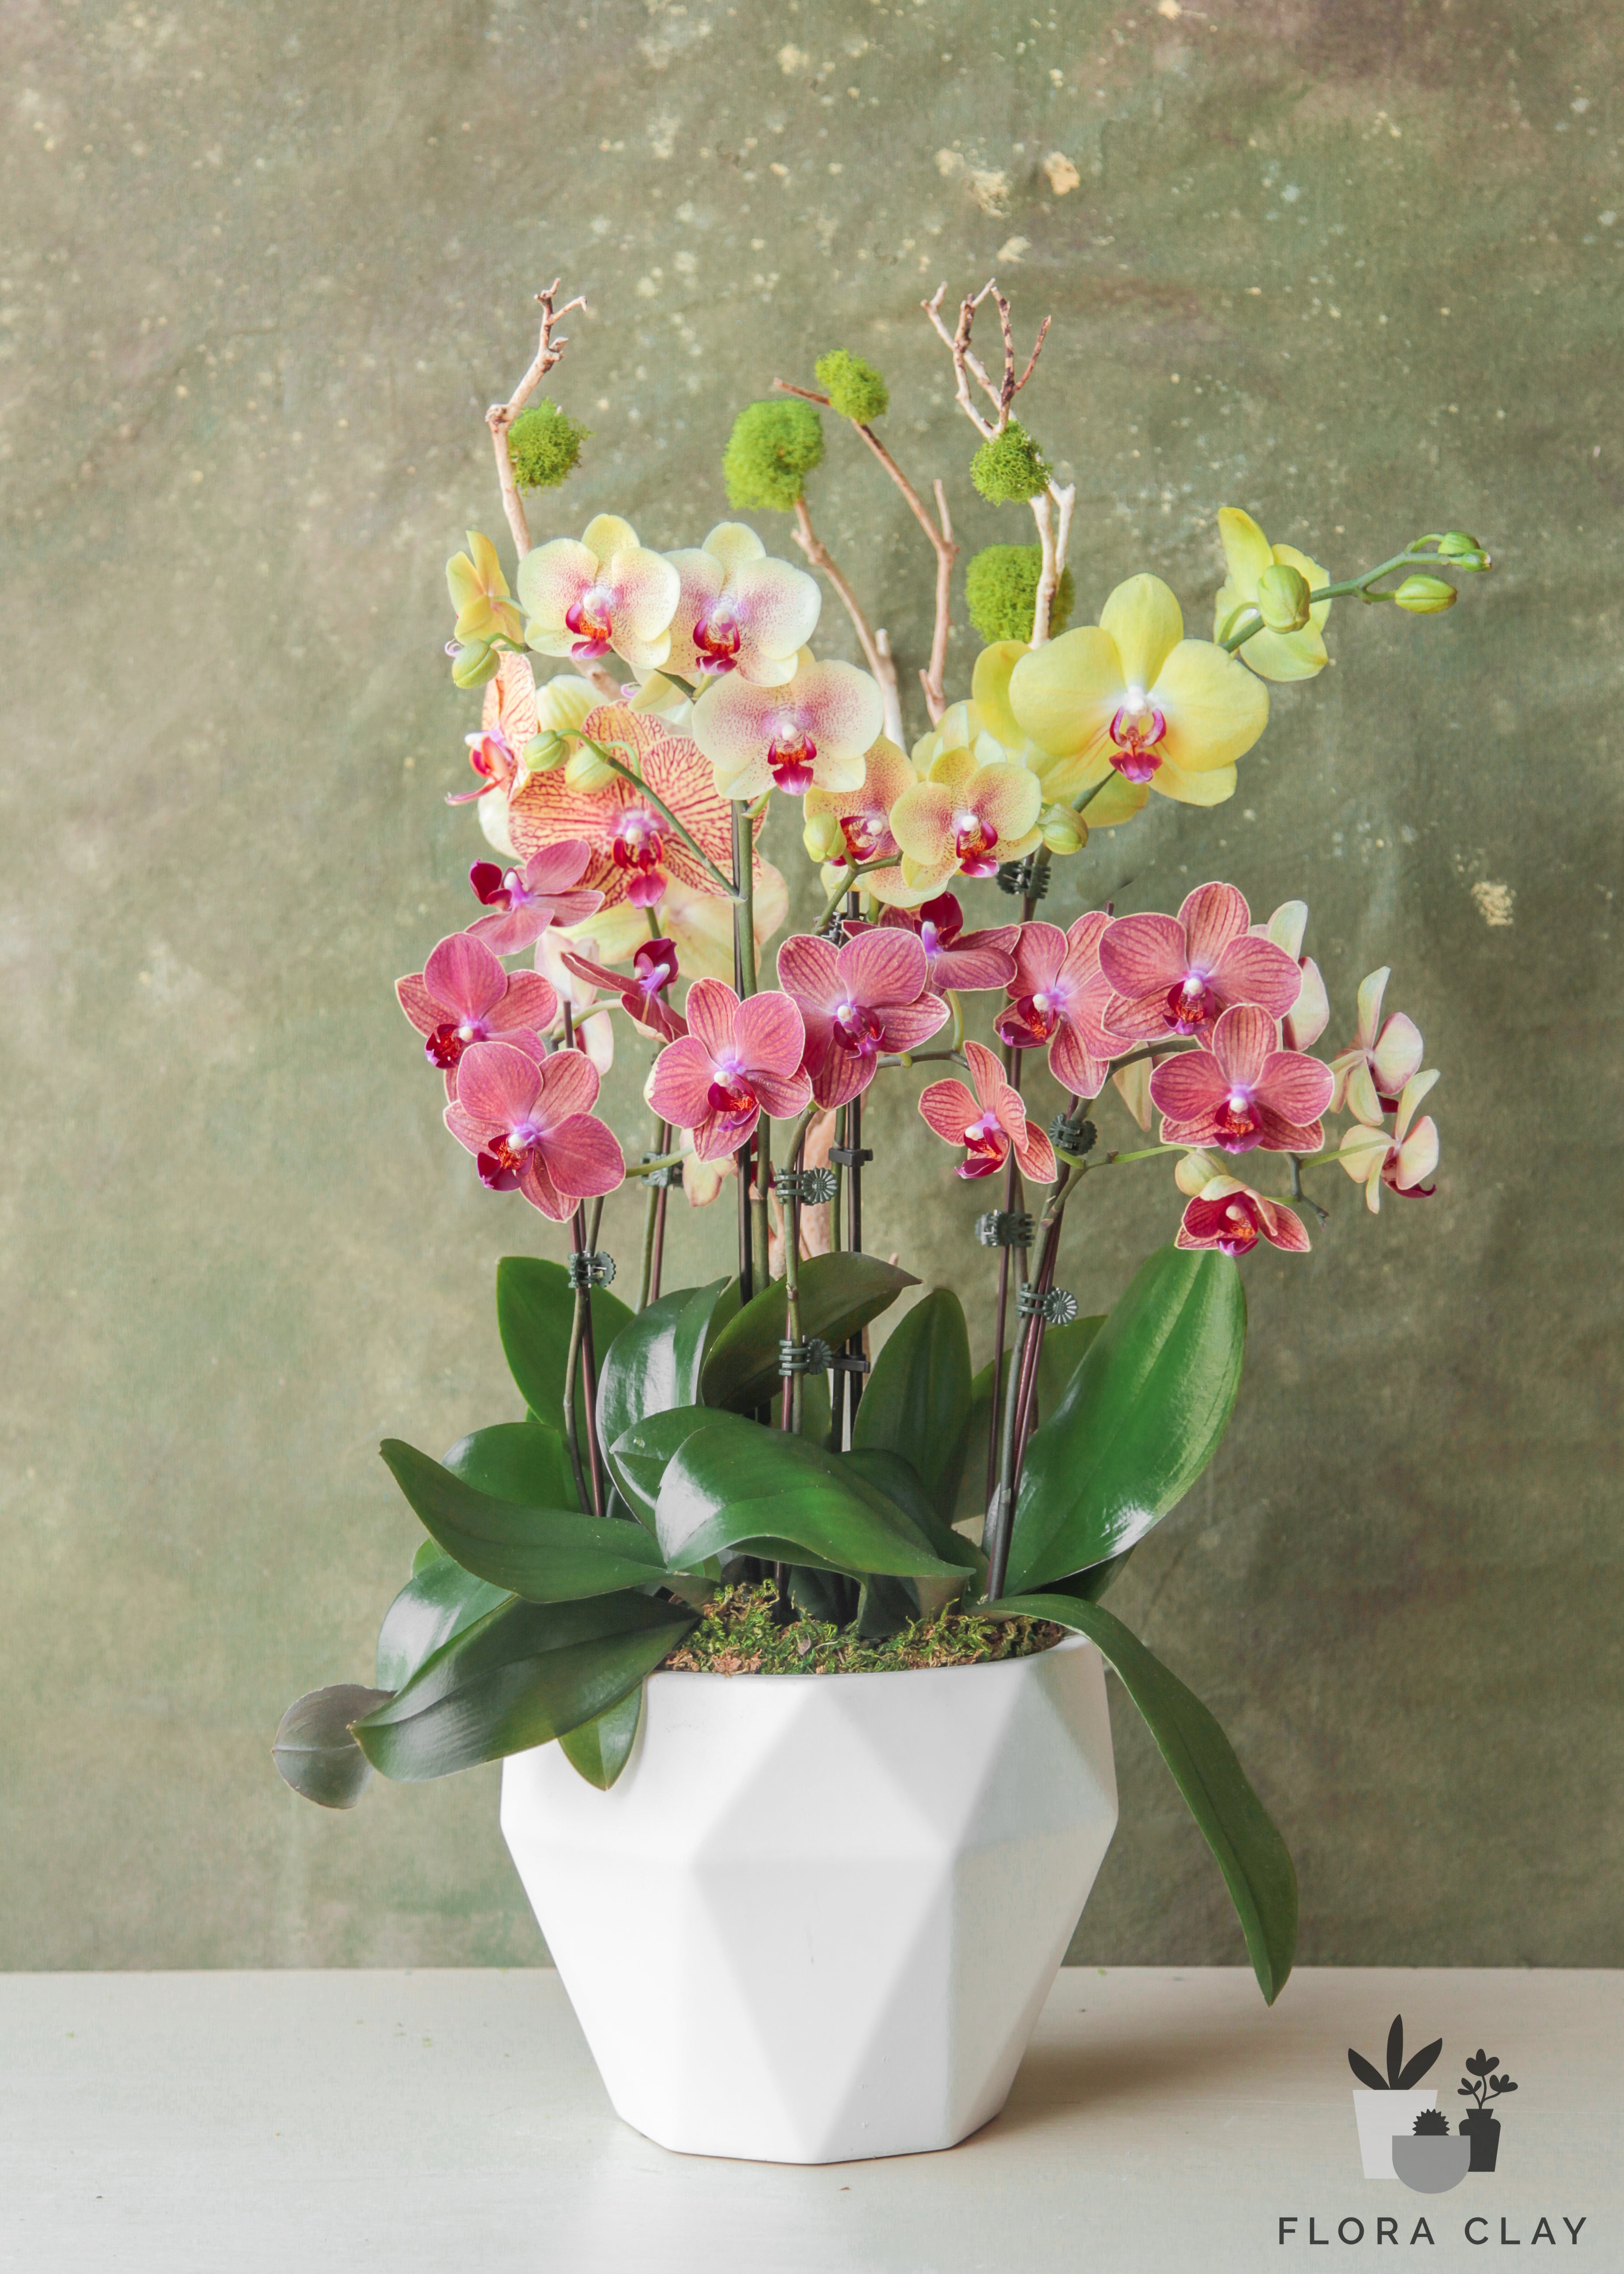 mosaic-orchid-arrangement-floraclay-1.jpg